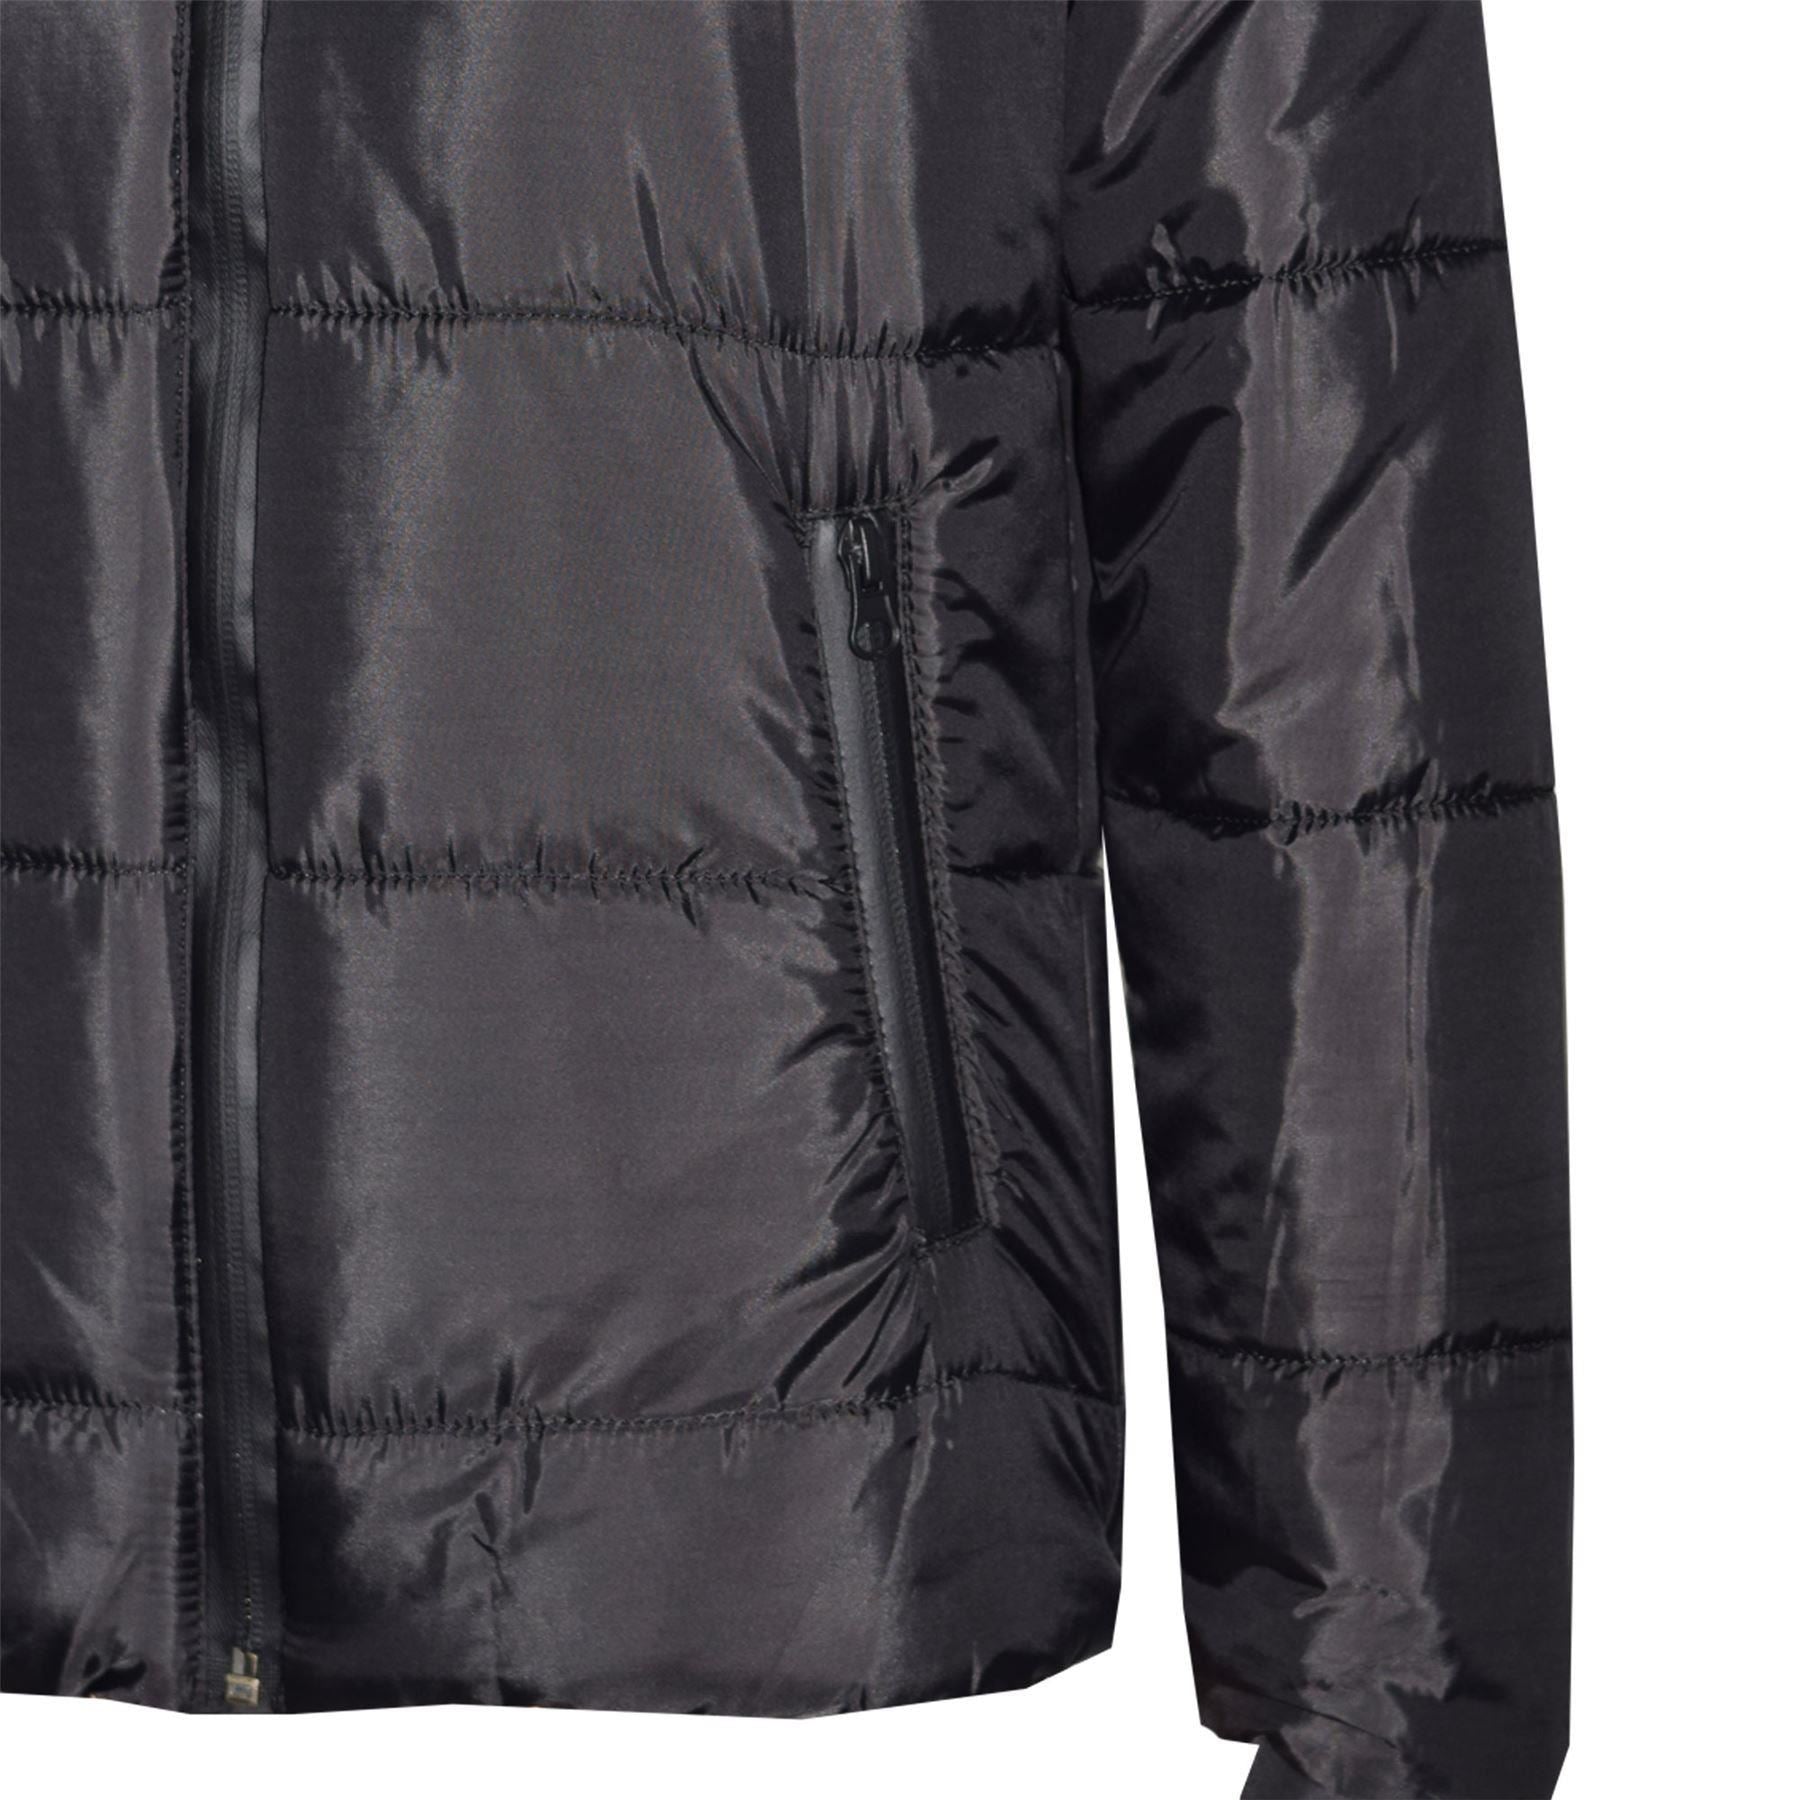 Kids Unisex Jacket Padded Black Puffer Hooded Zipped Coat Warm Thick Coats